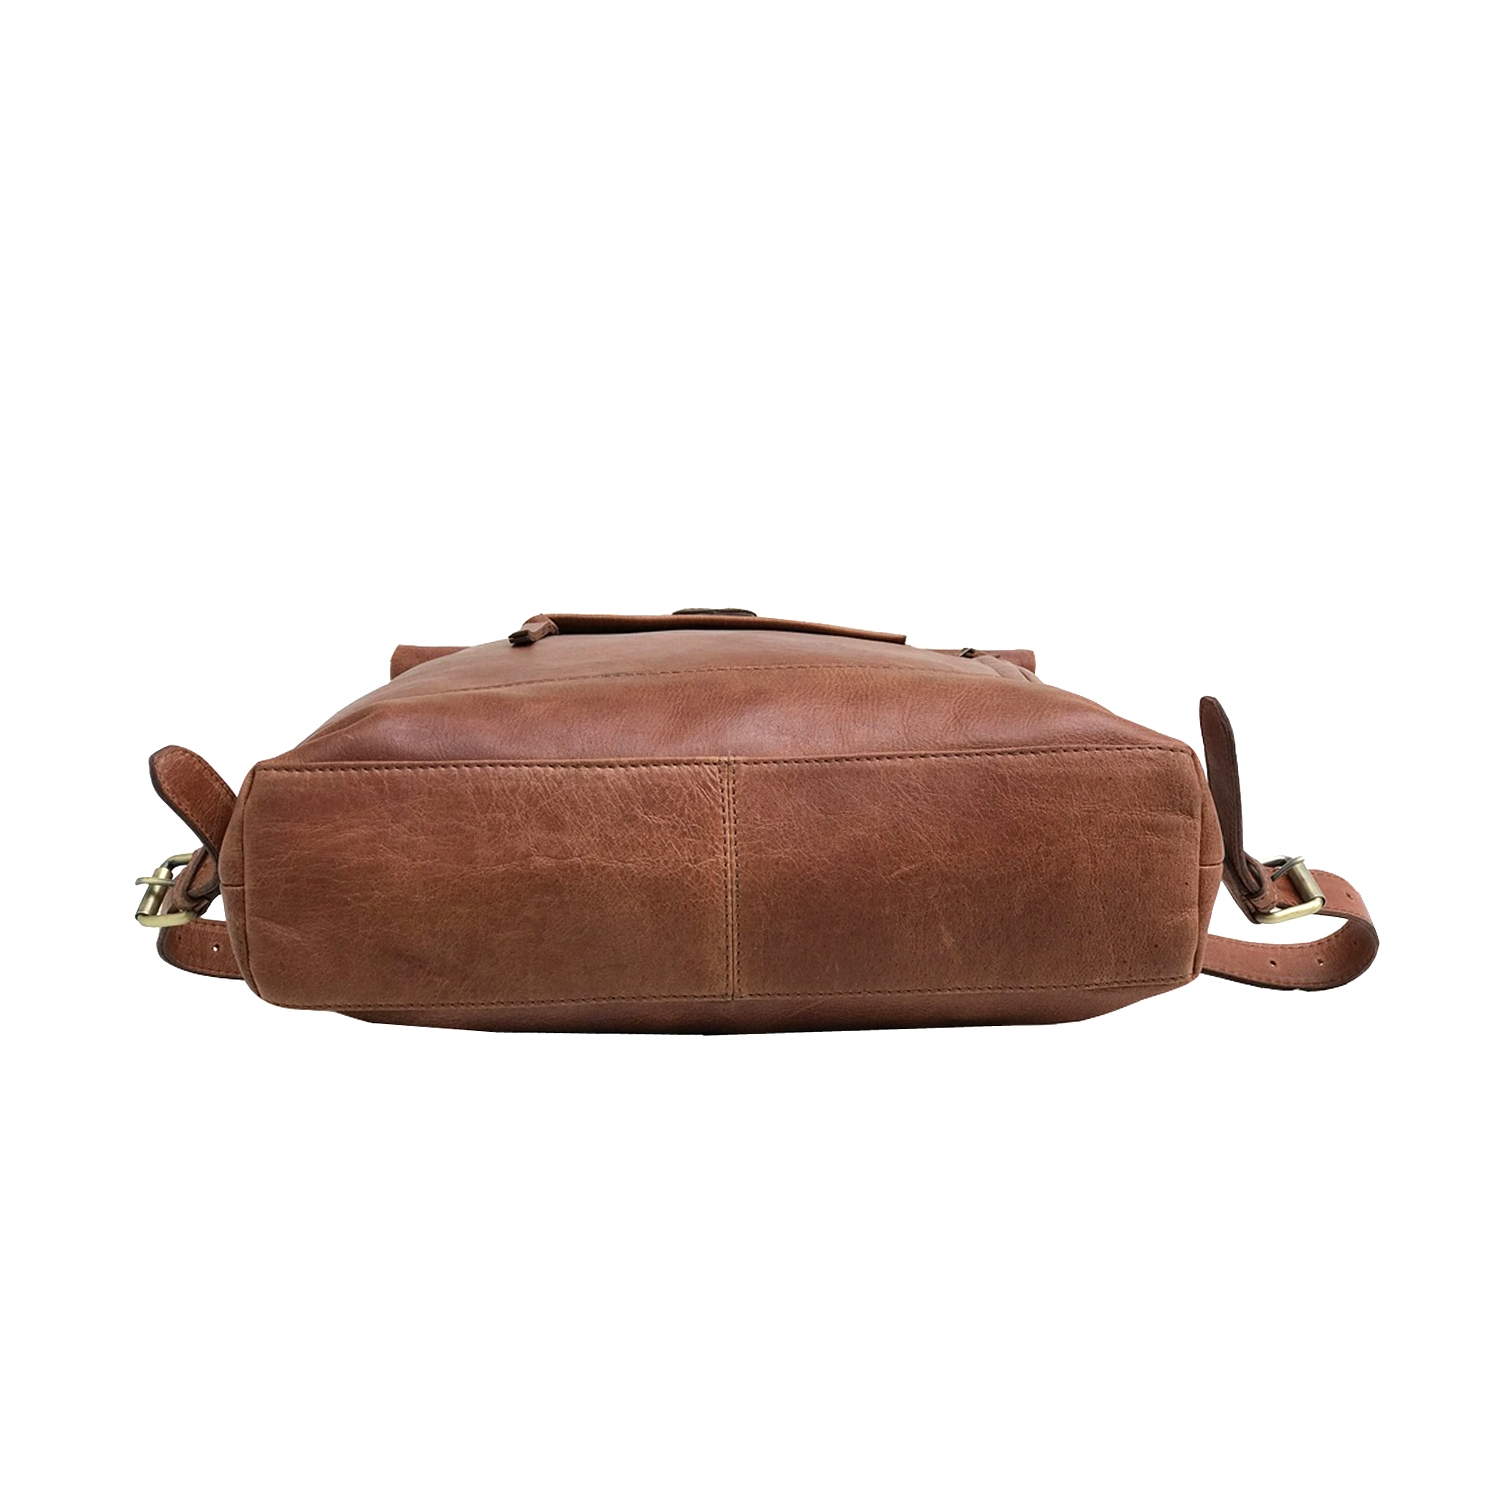 Soft Leather Backpack | Zakara Leather Bags